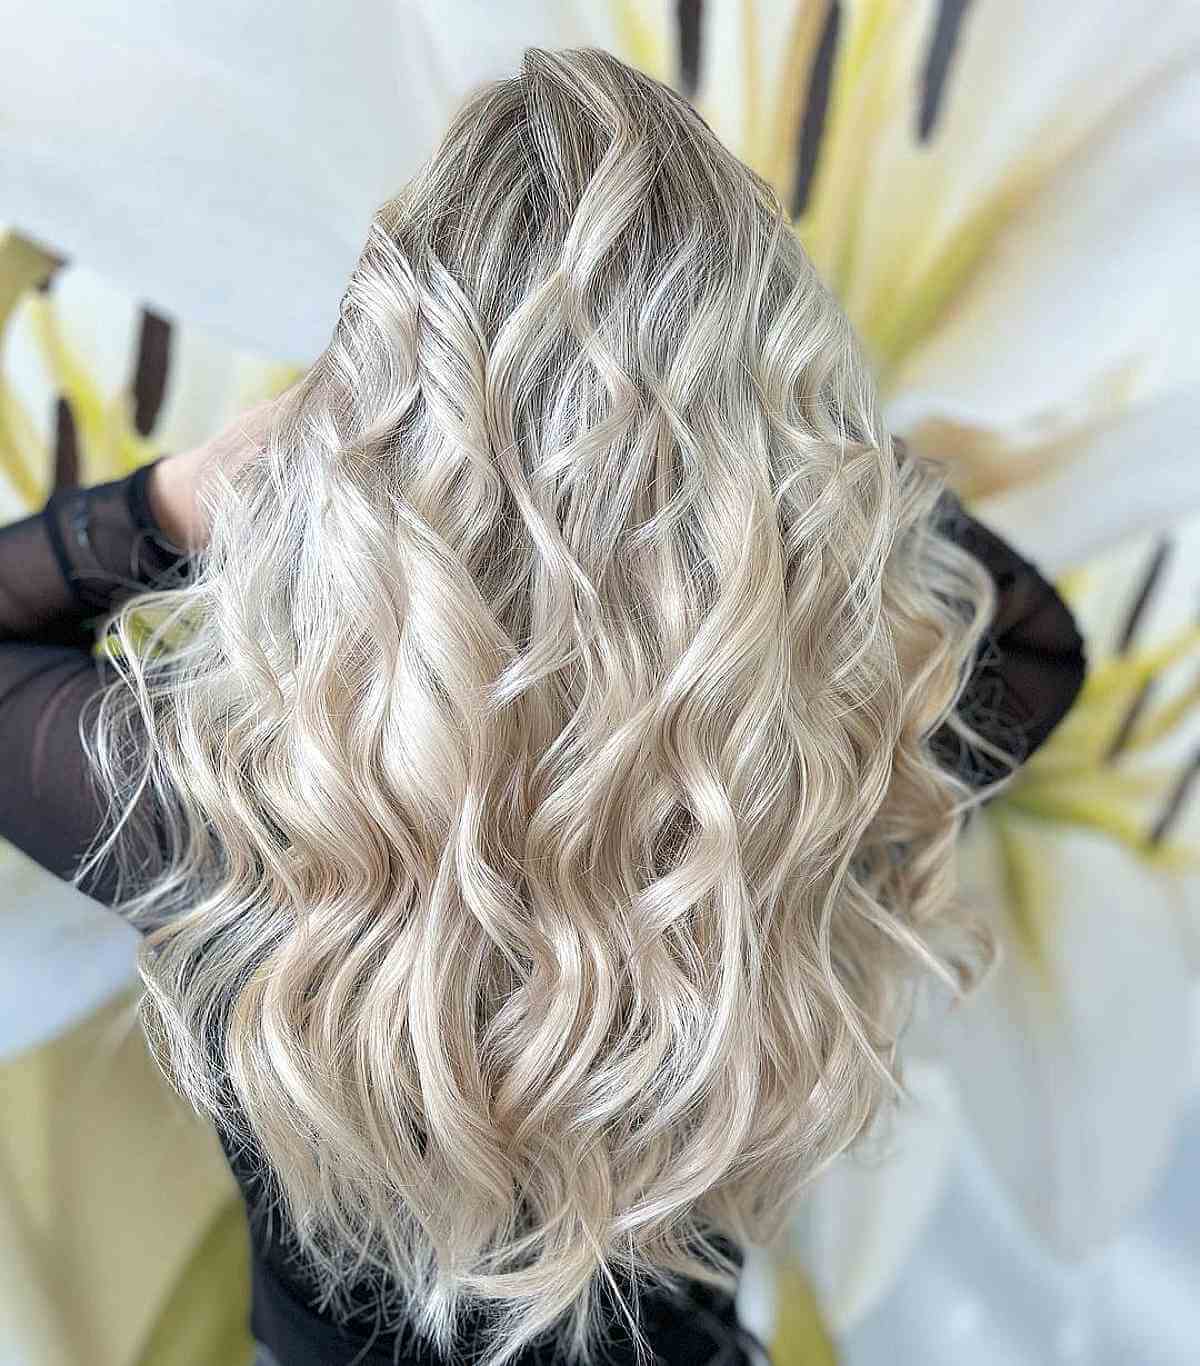 Icy ash blonde balayage hairstyle